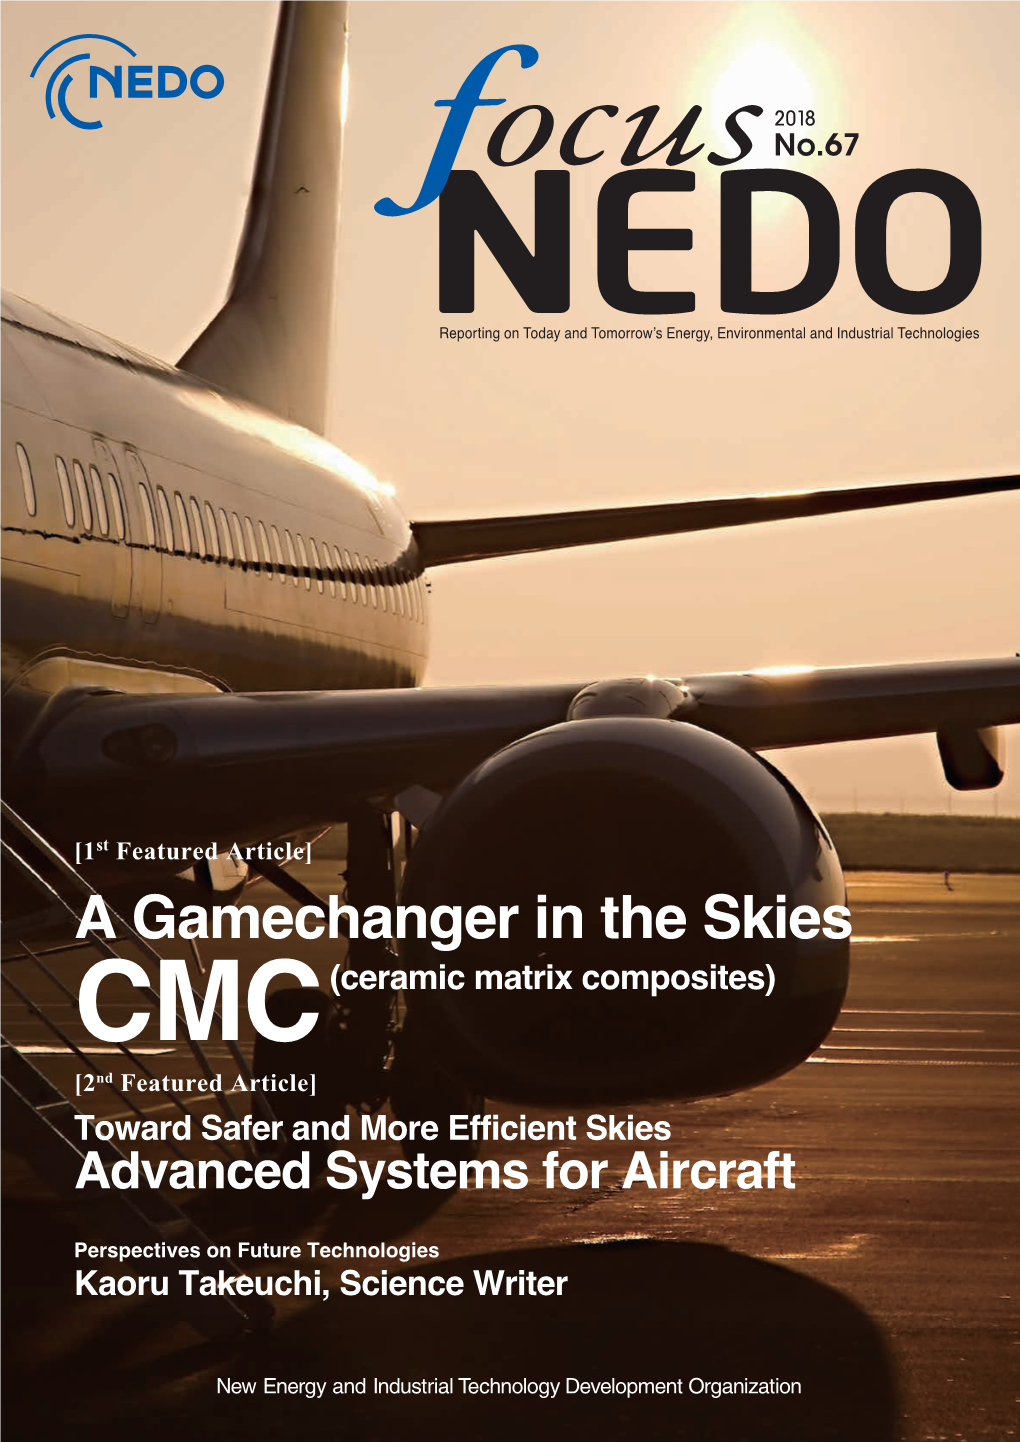 A Gamechanger in the Skies CMC(Ceramic Matrix